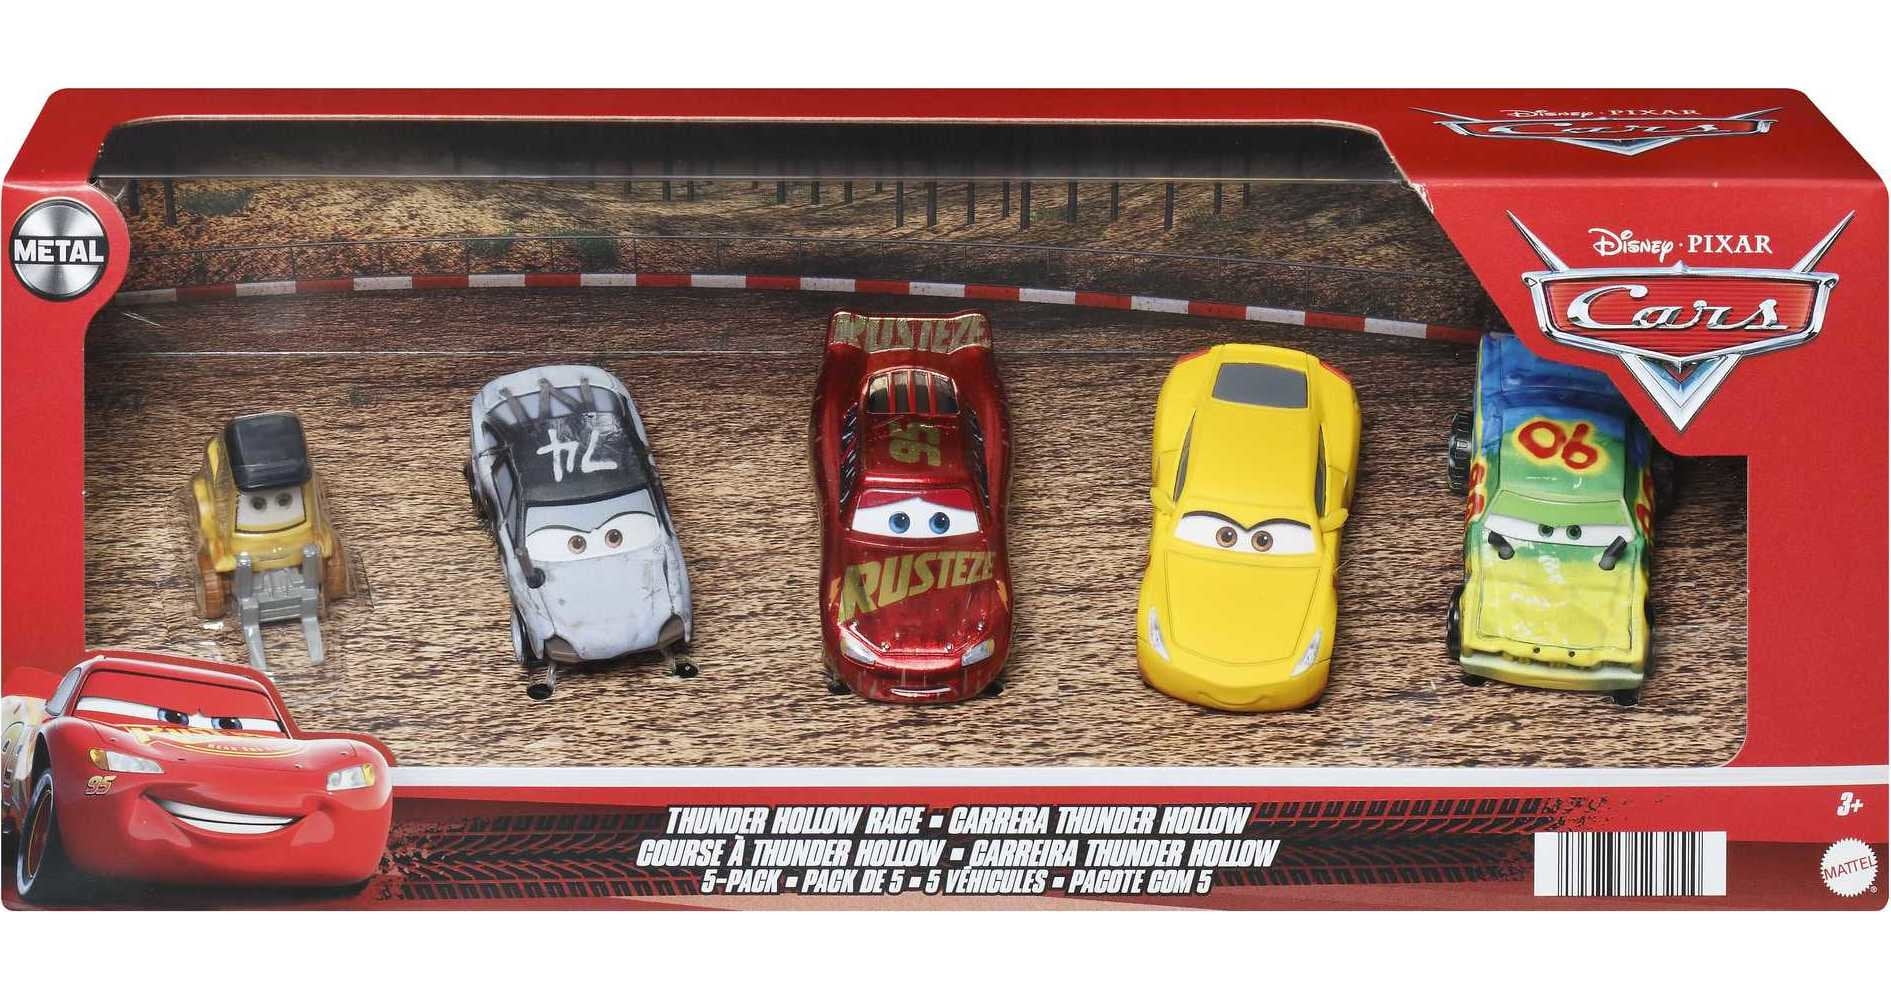 Disney Pixar Cars 3 Vehicle 5-Pack of Toy Cars